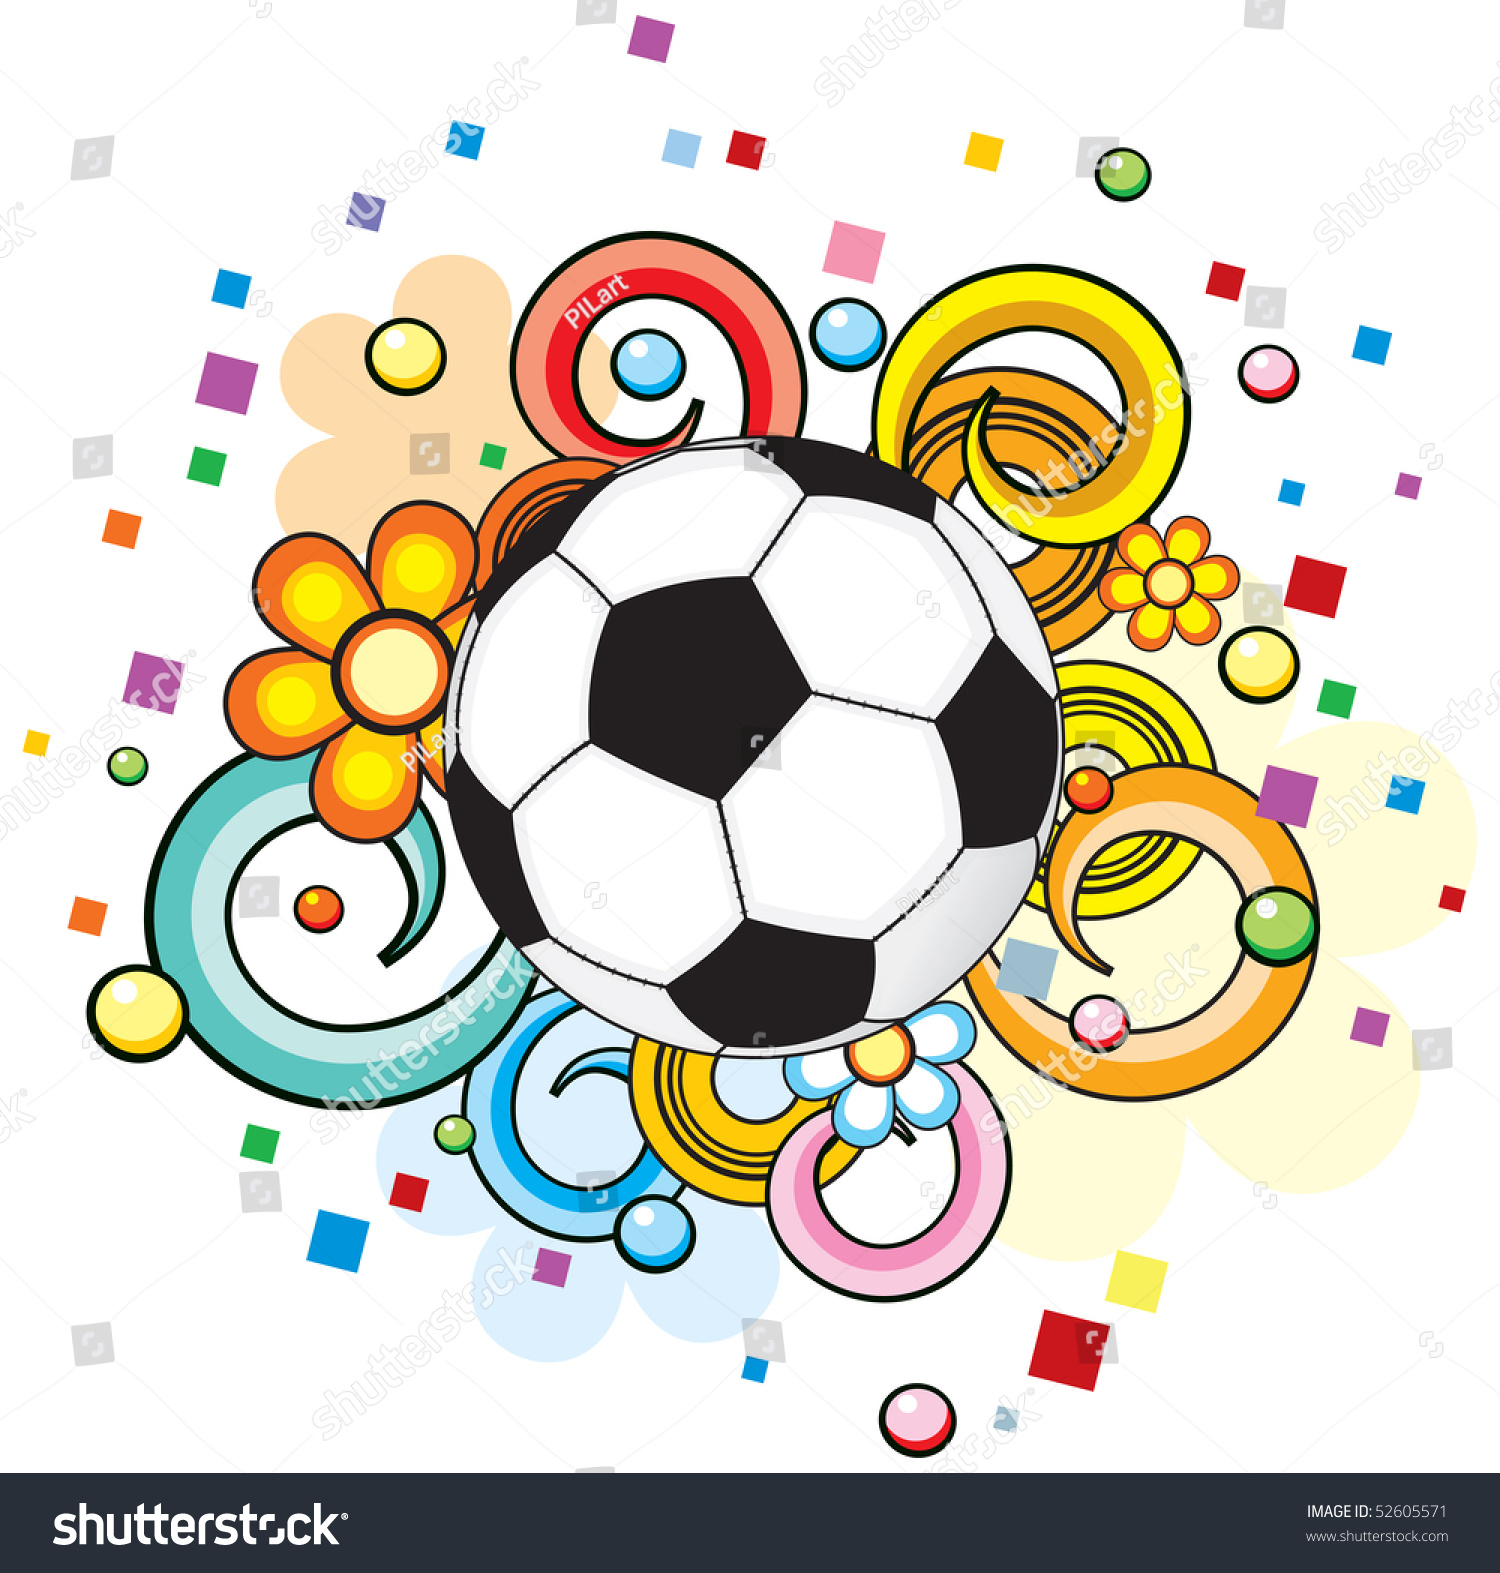 Soccer Retro Styled Symbol-Vector - 52605571 : Shutterstock